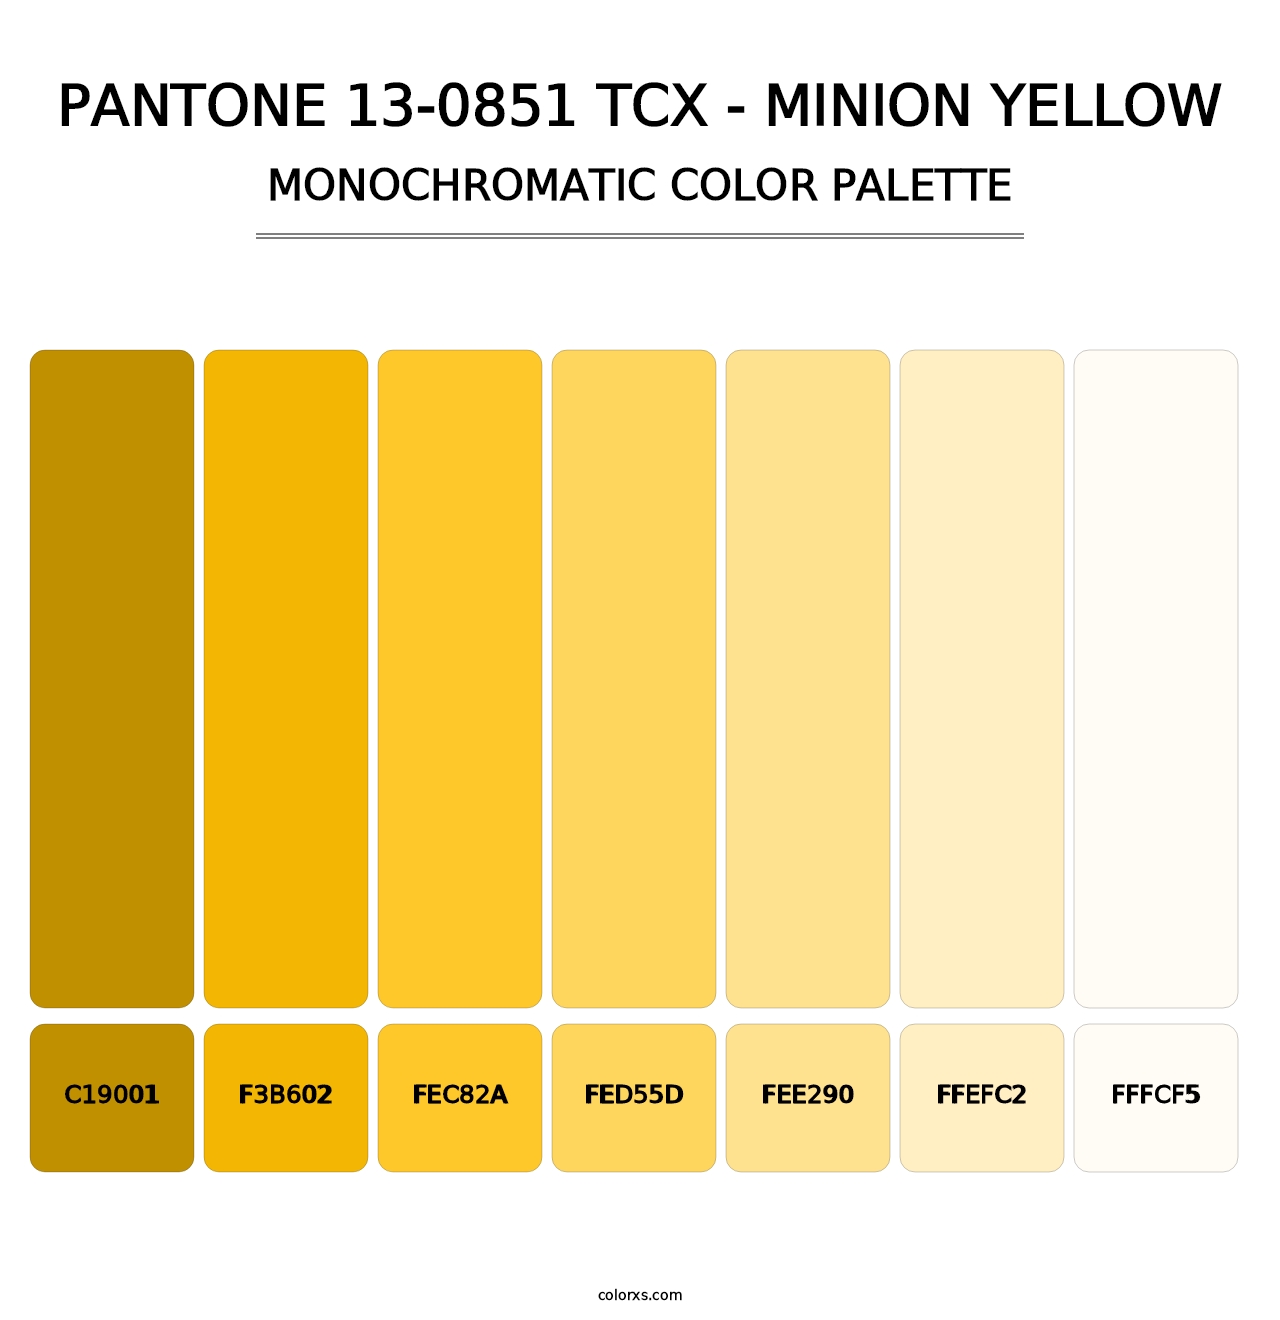 PANTONE 13-0851 TCX - Minion Yellow - Monochromatic Color Palette